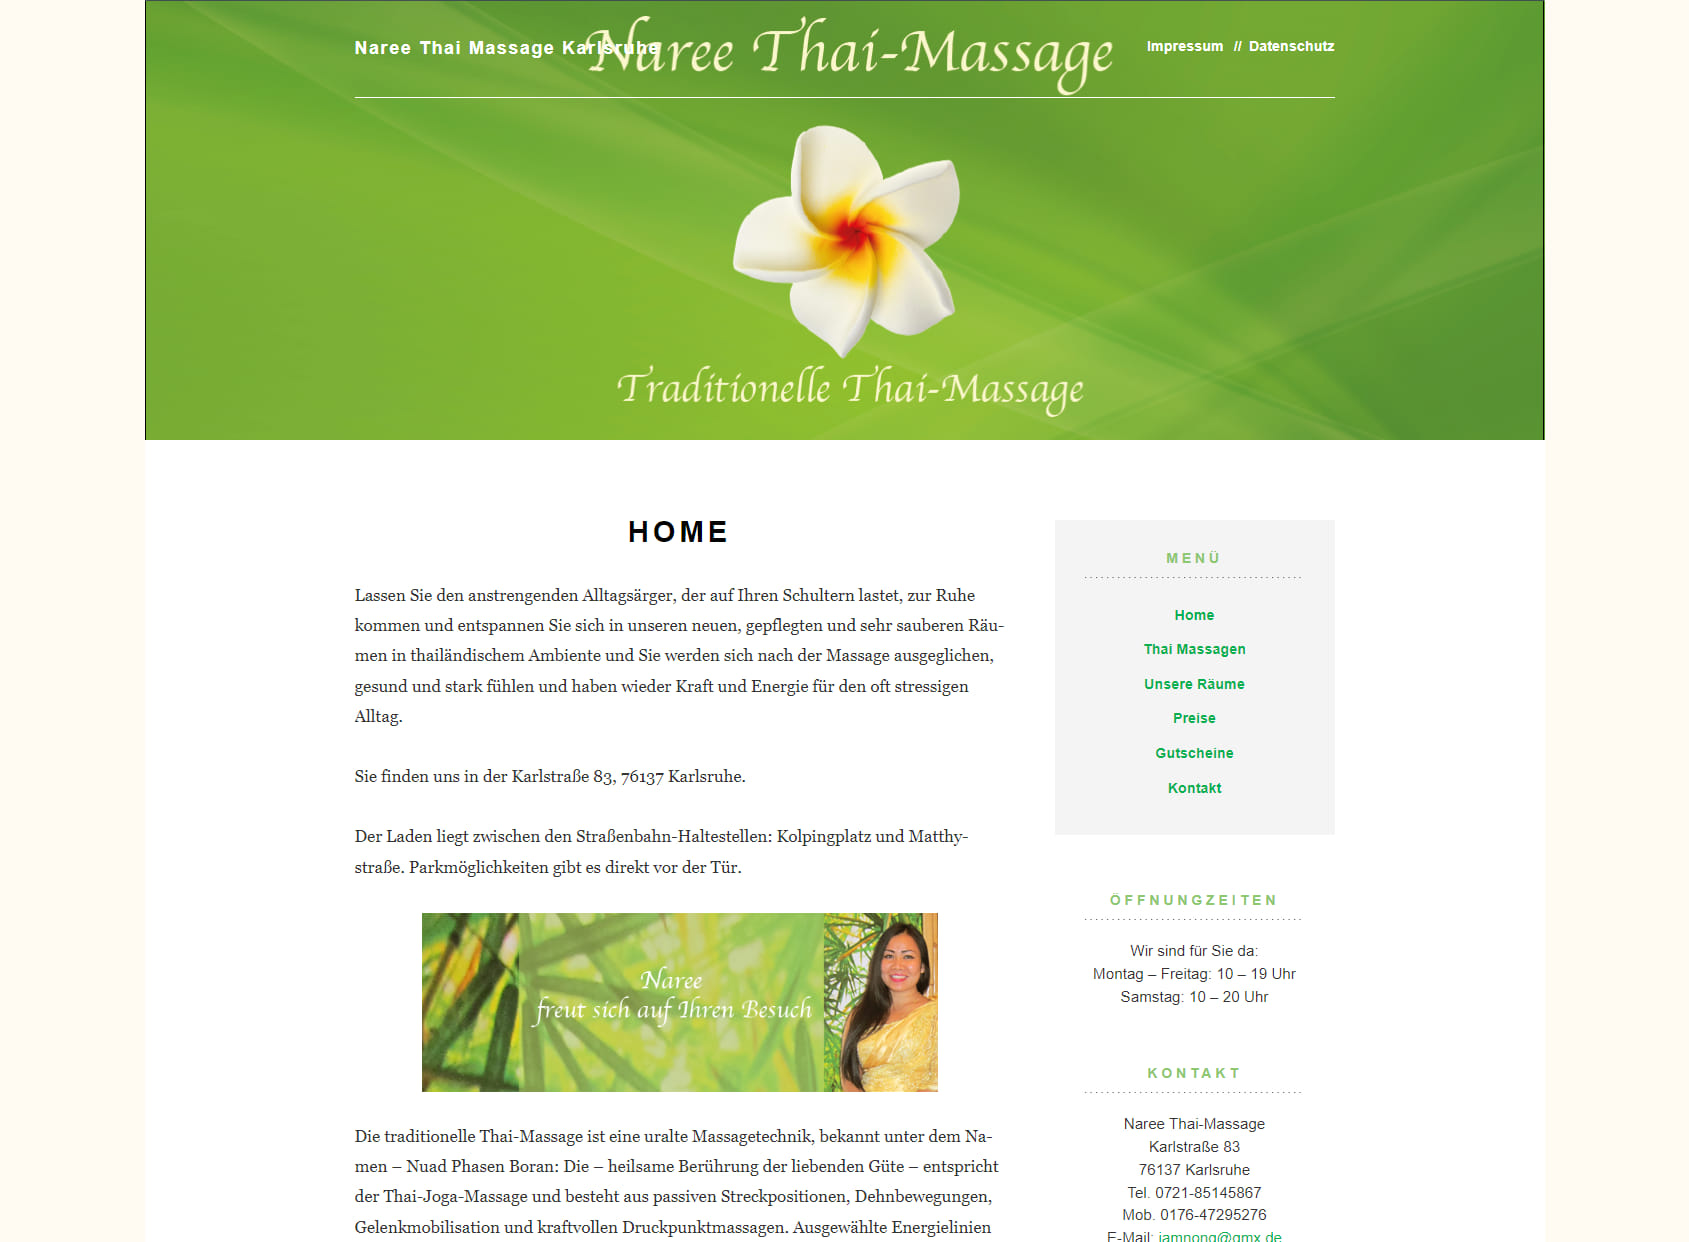 Naree Thai-Massage